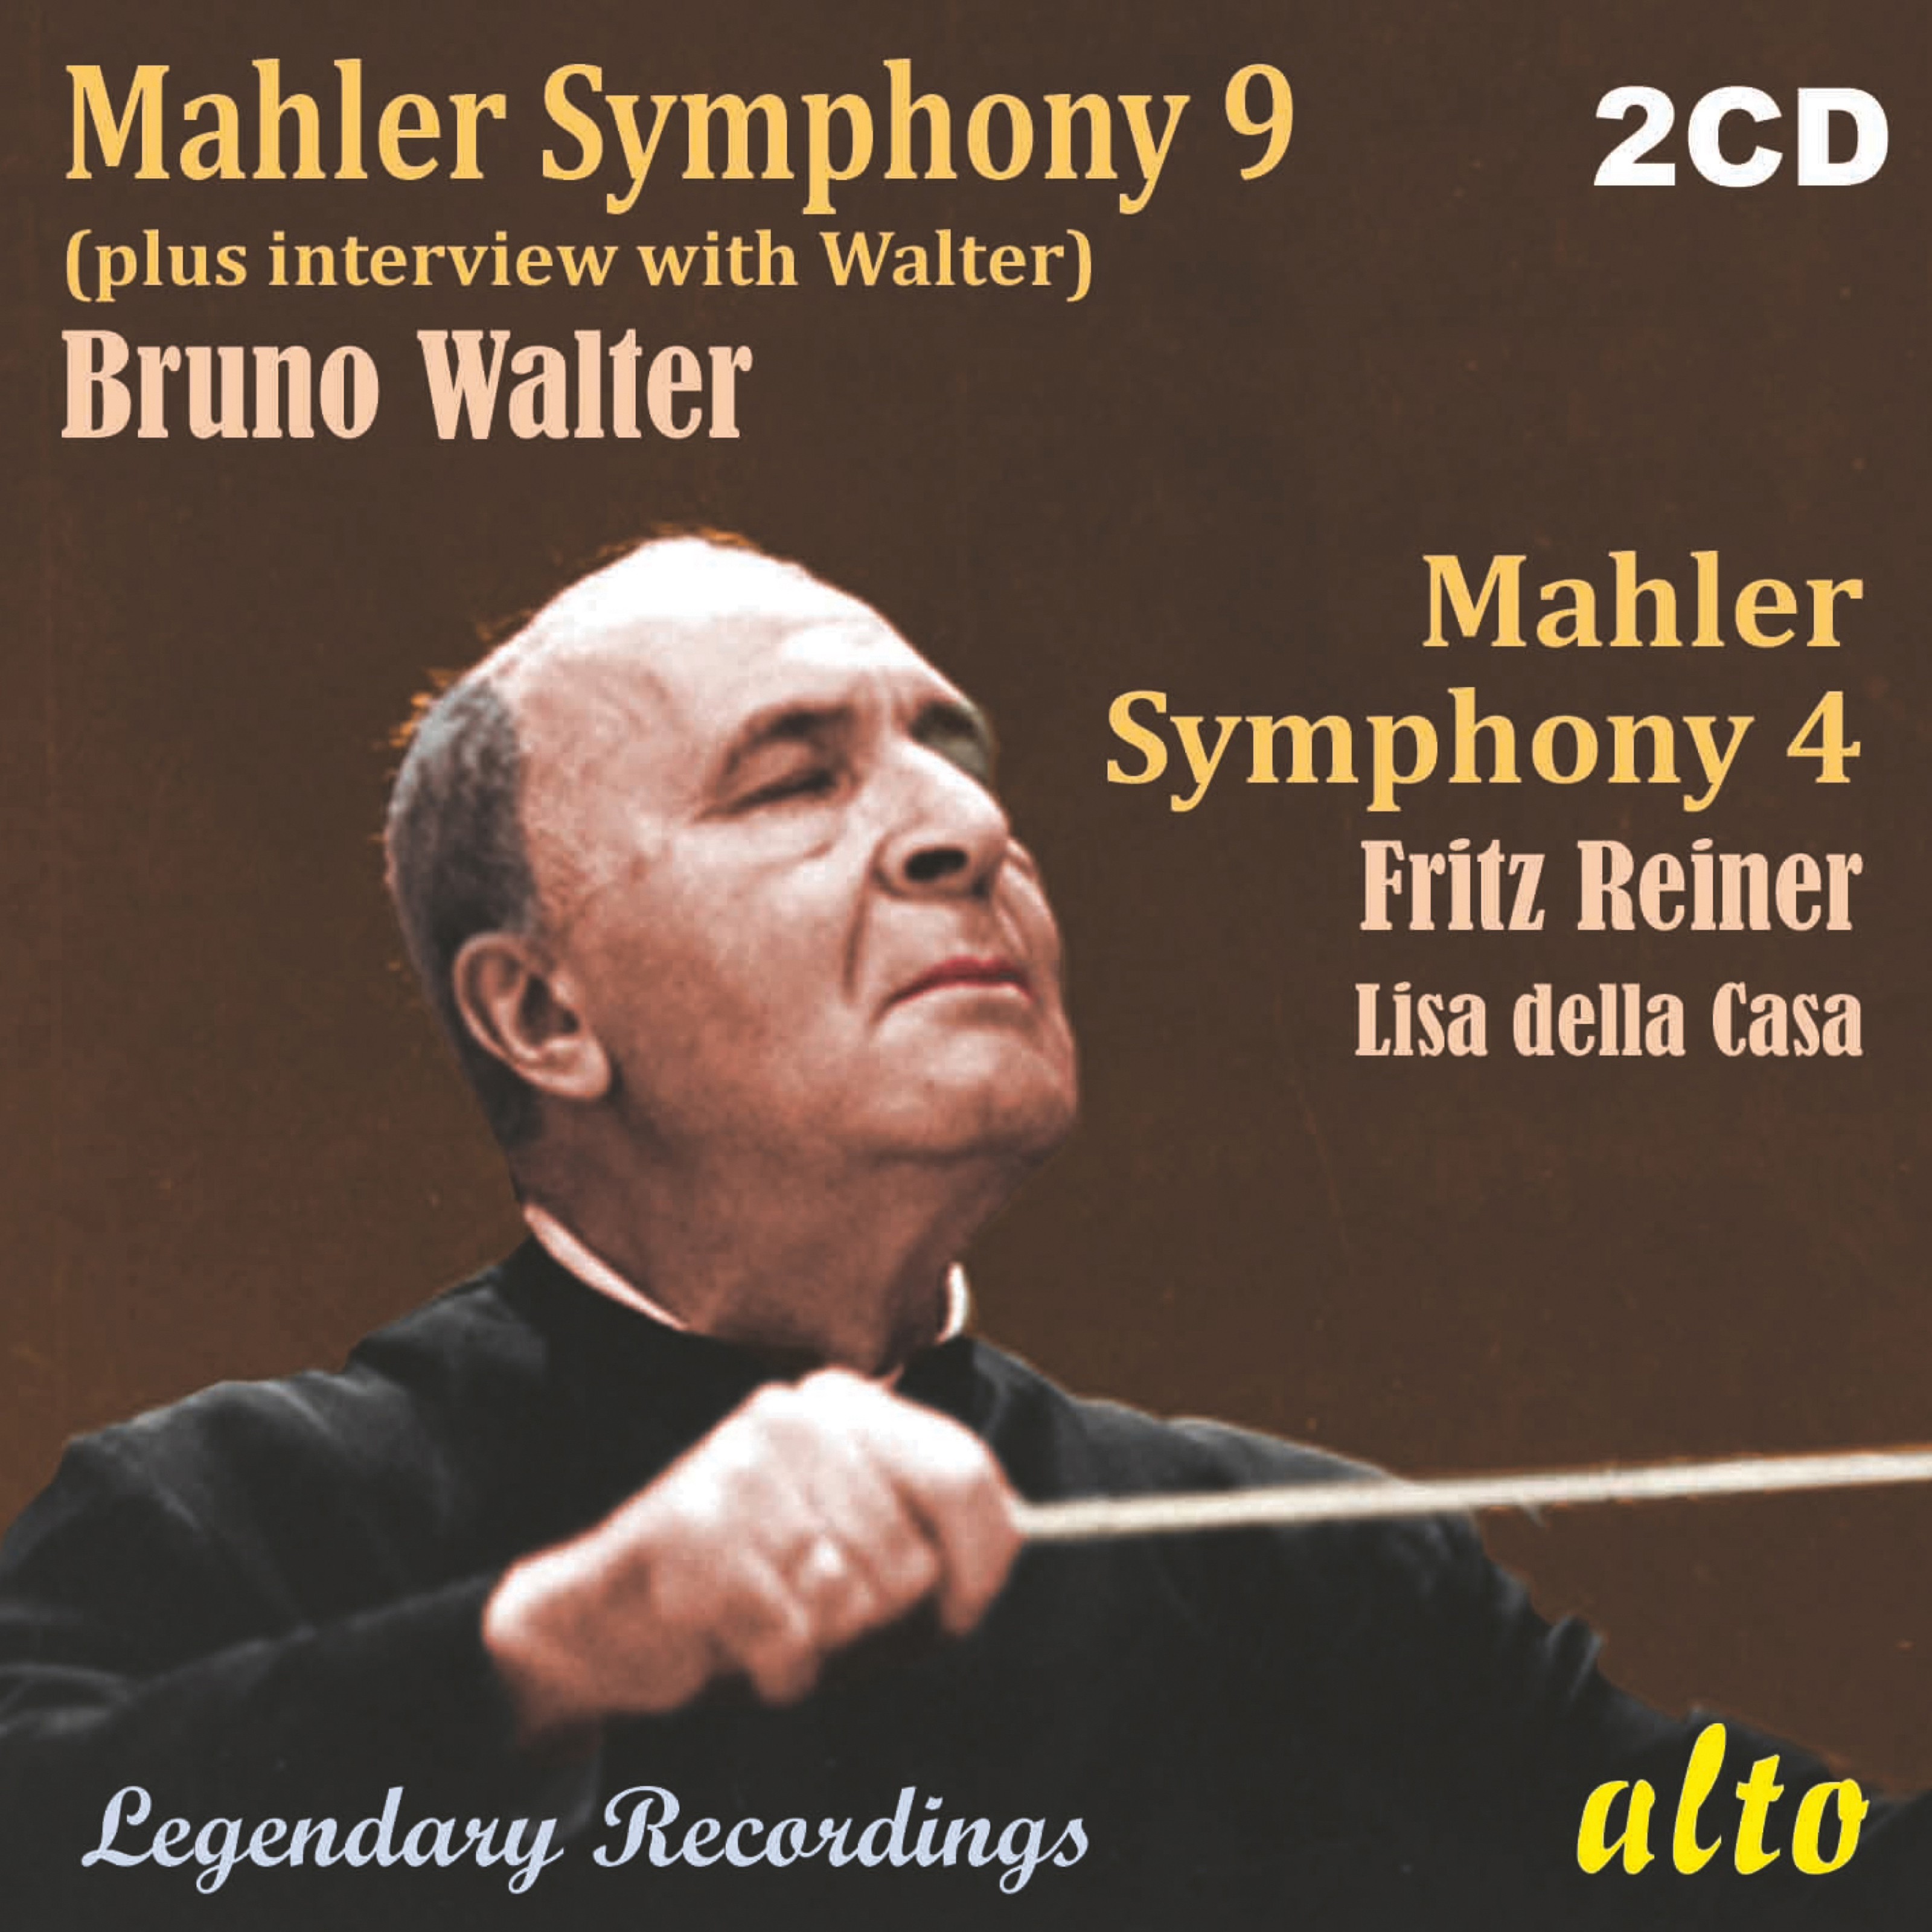 Arnold Michaelis Interviews Bruno Walter about Recording Mahler